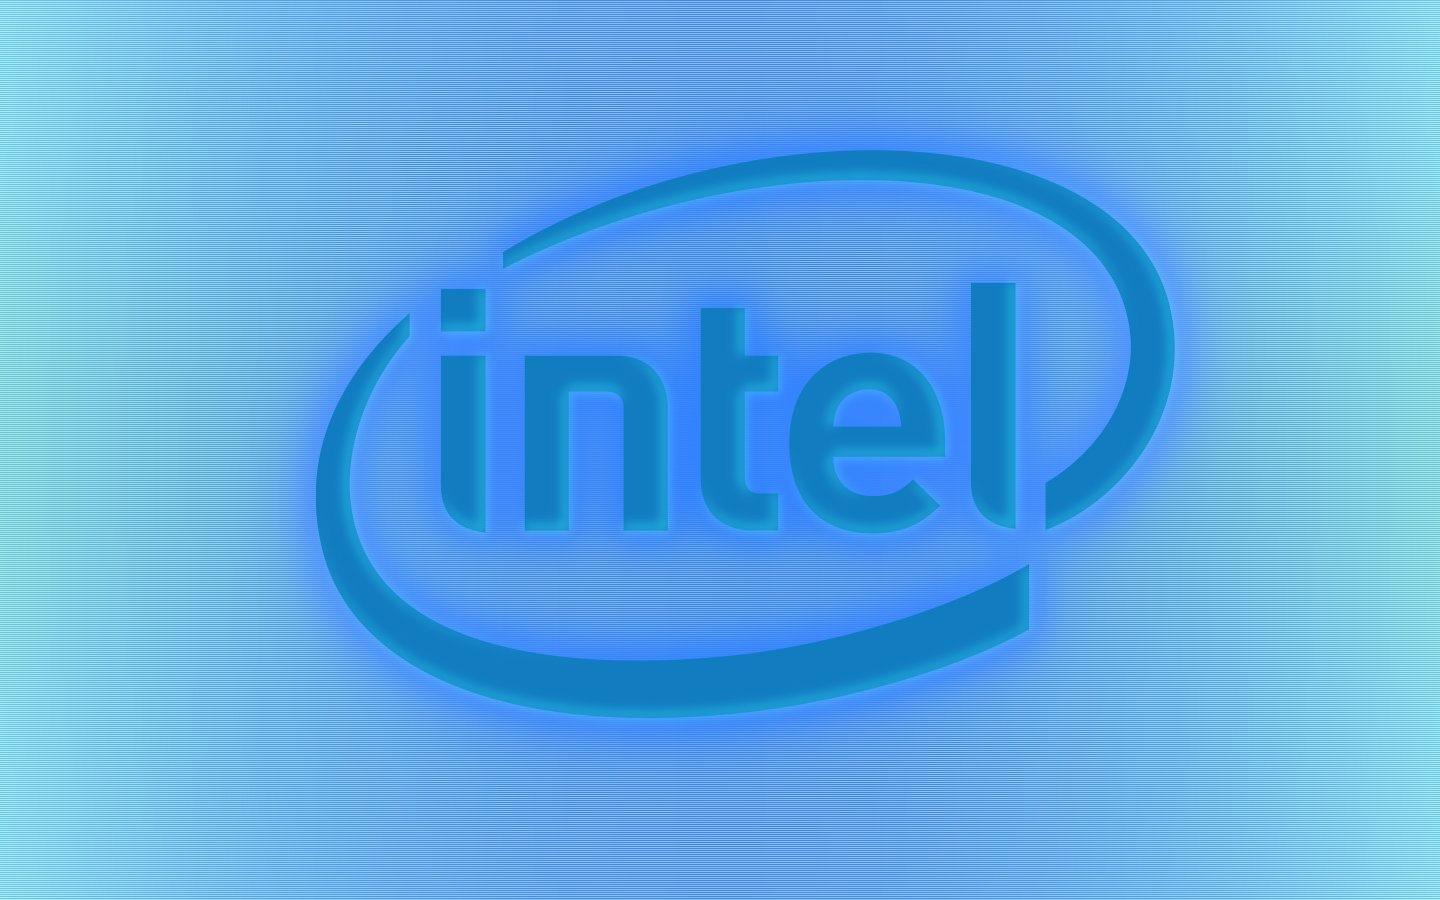 Intel Wallpaper Intel wallpaper by lynchmob10